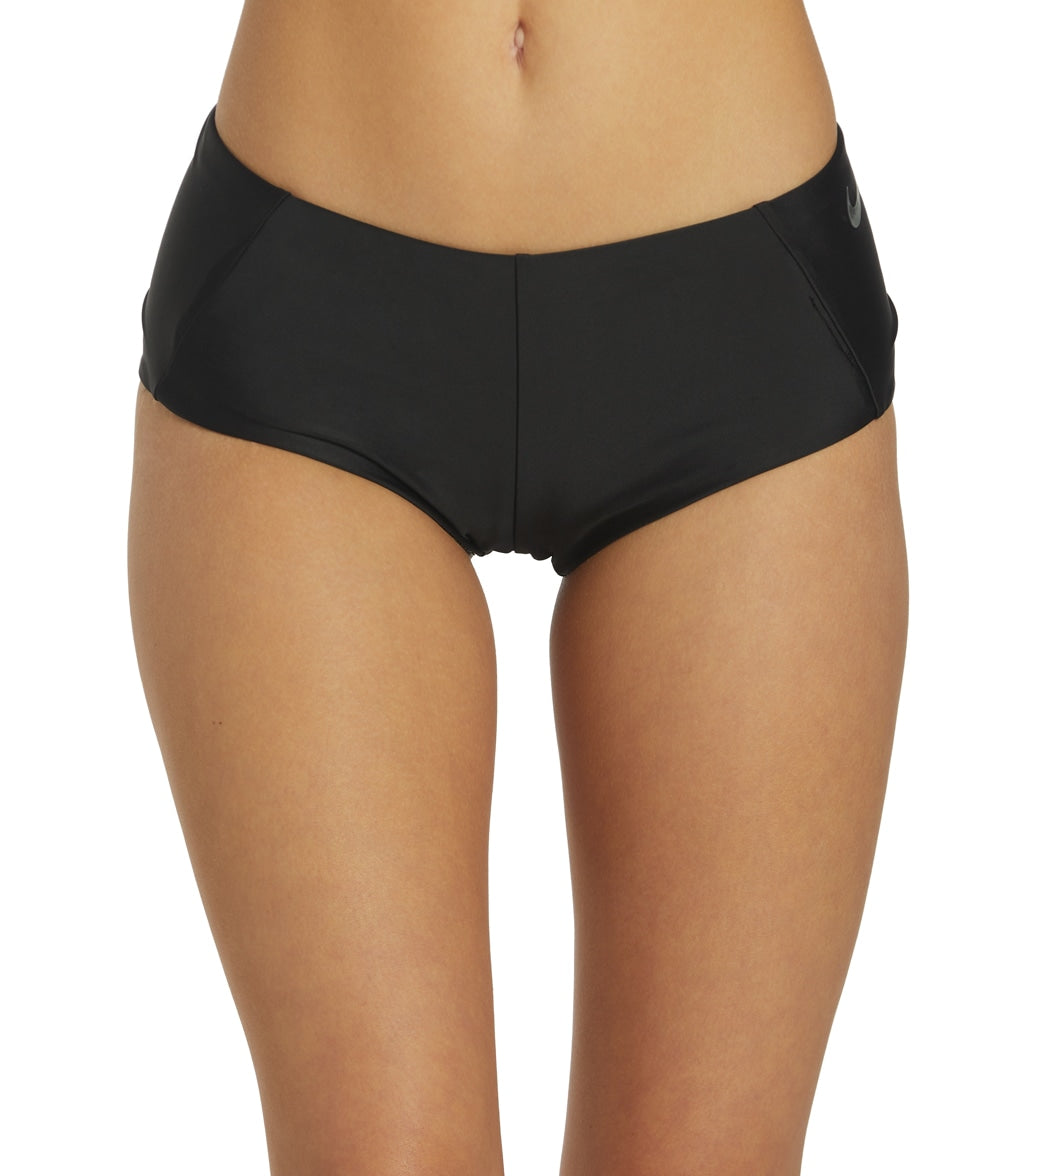 Nike Women's Hydralock Cheeky Kickshort Bikini Bottom at SwimOutlet.com